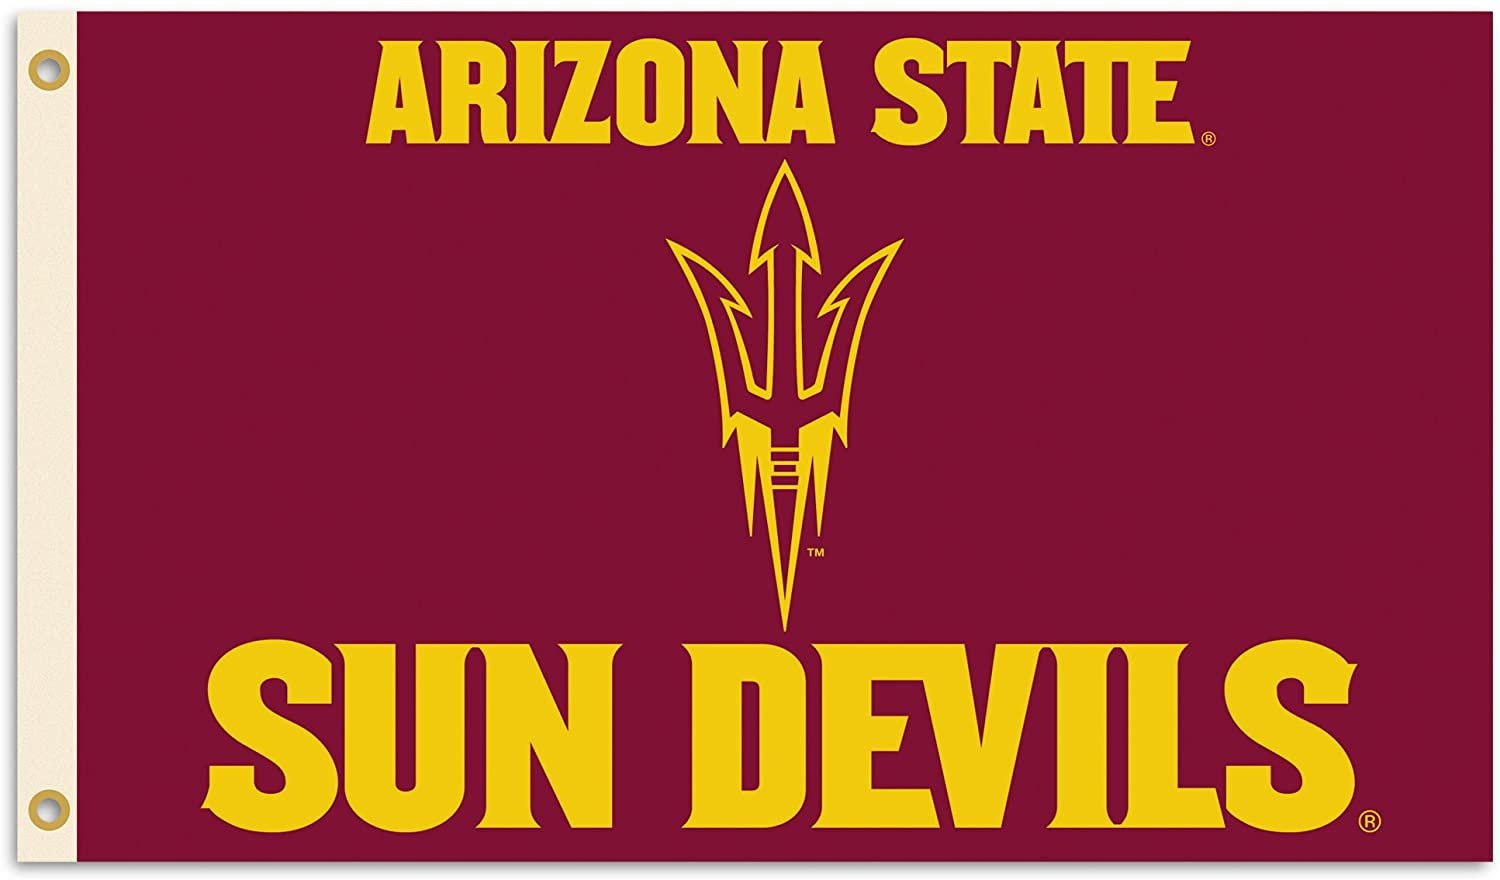 Arizona State University Sun Devils 3x5 Feet Flag Banner with Metal Grommets ASU Outdoor Indoor Use